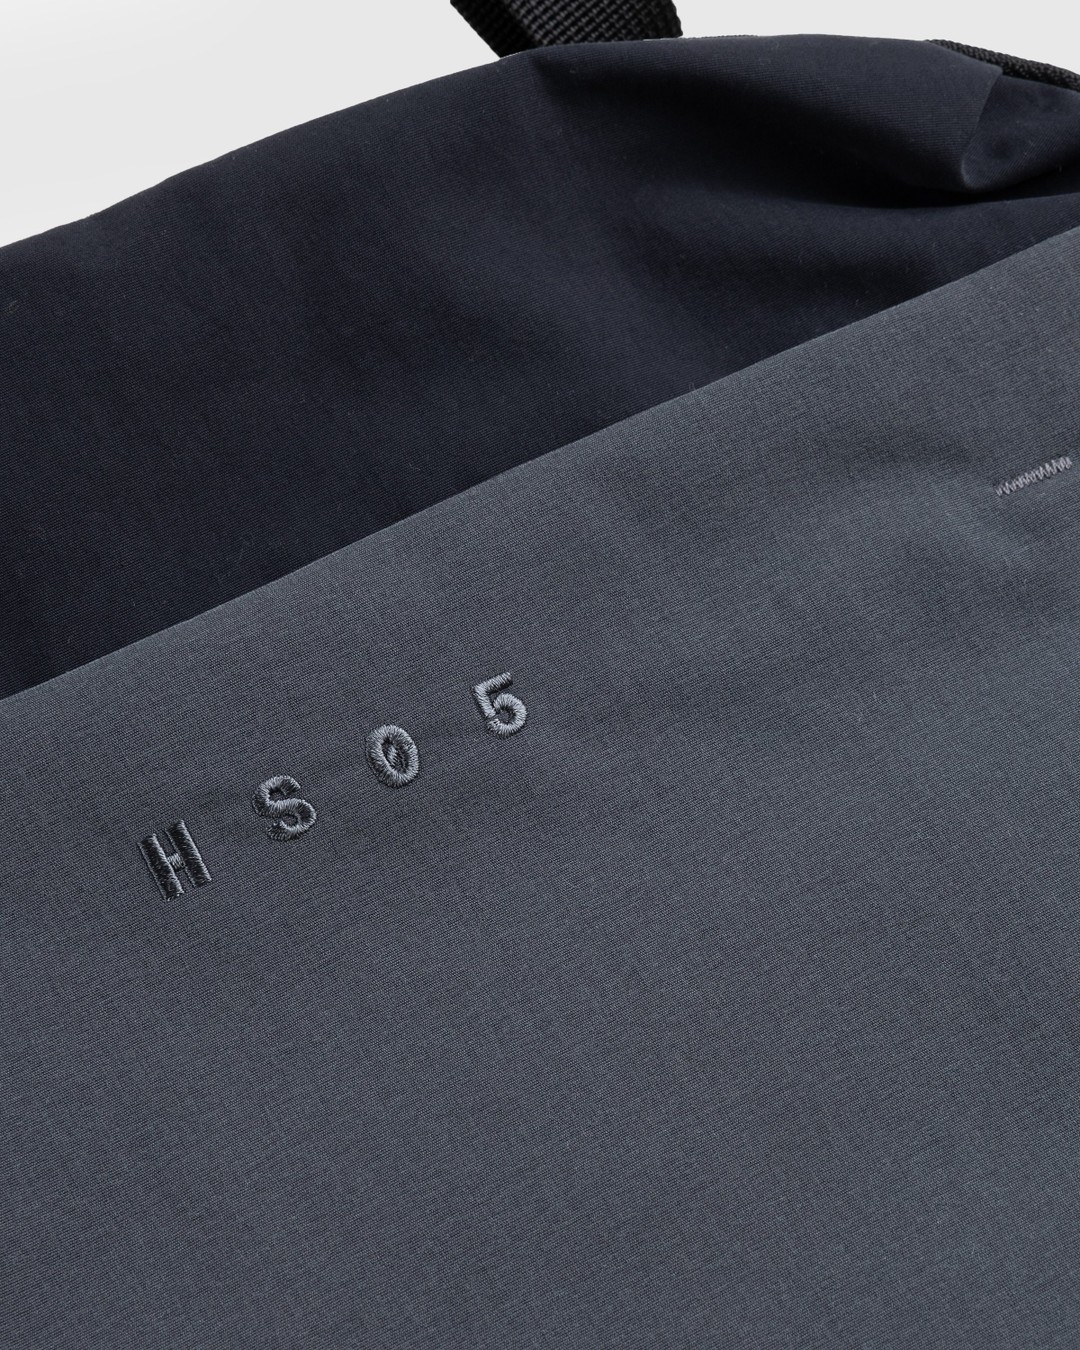 Highsnobiety HS05 – 3 Layer Nylon Side Bag Black - Bags - Black - Image 5